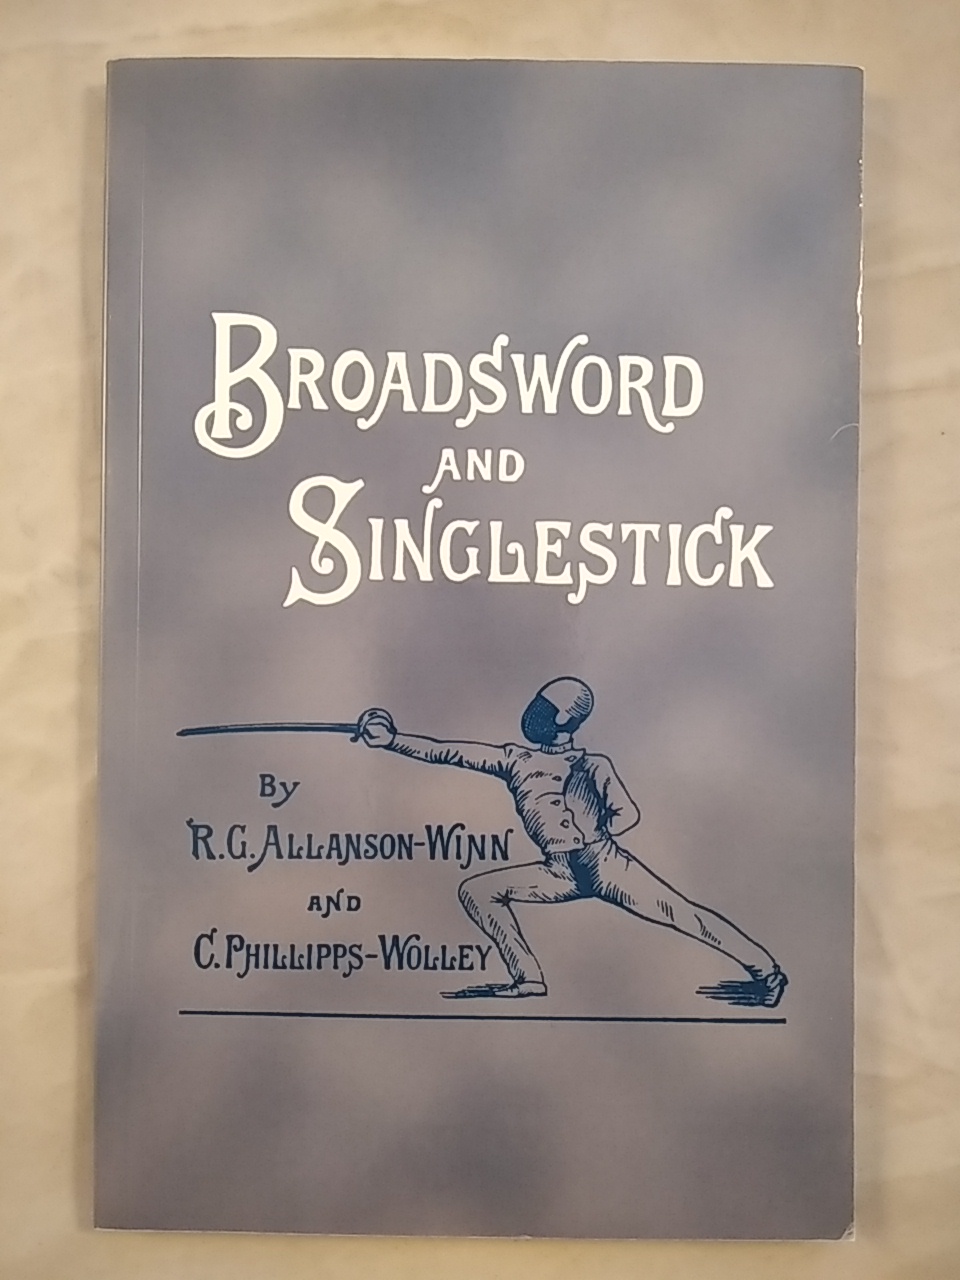 Broadsword and Singlestick, Sprache: Englisch. - Allanson-winn, R. c. and C. Phillipps-wolley